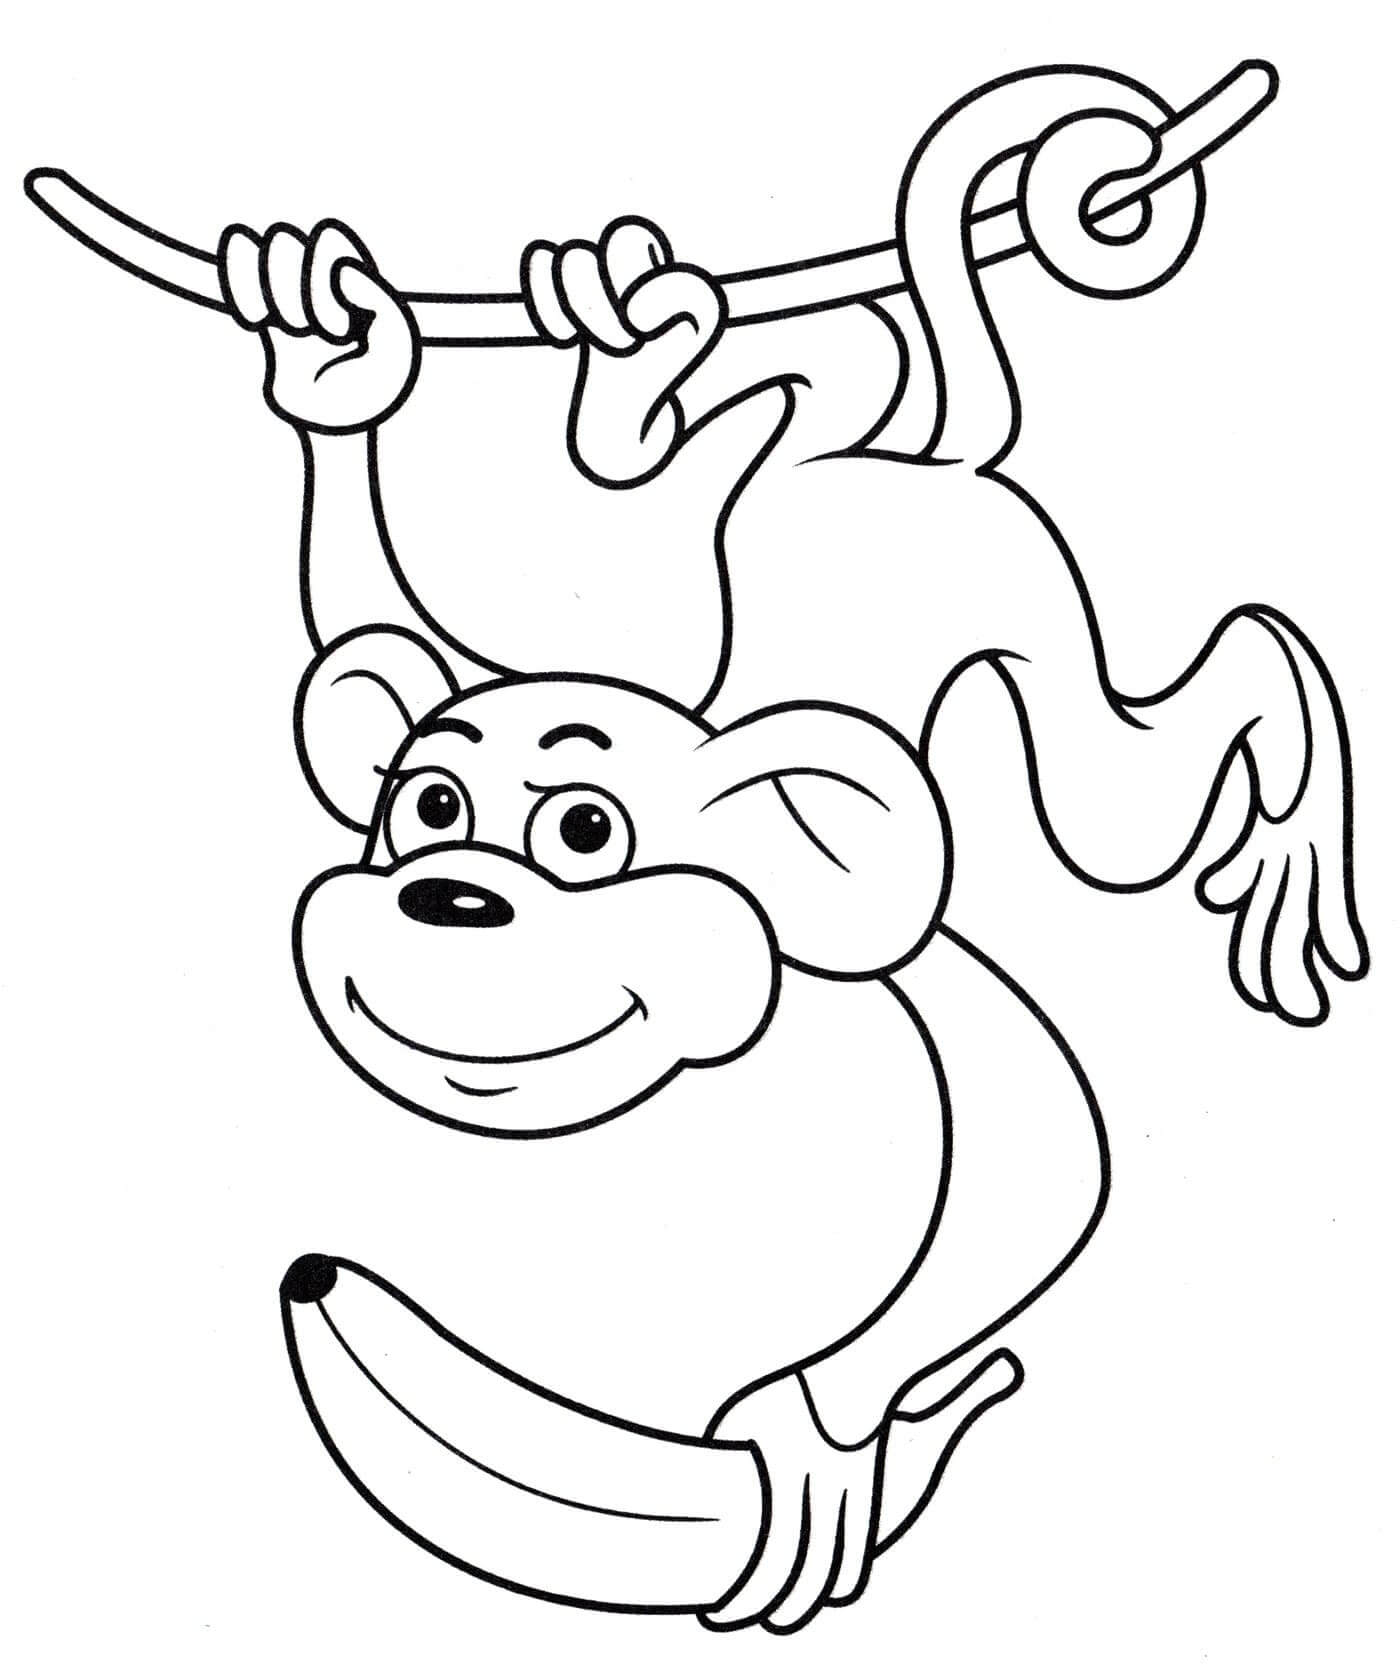 Affe hält Banane und Kletterseil